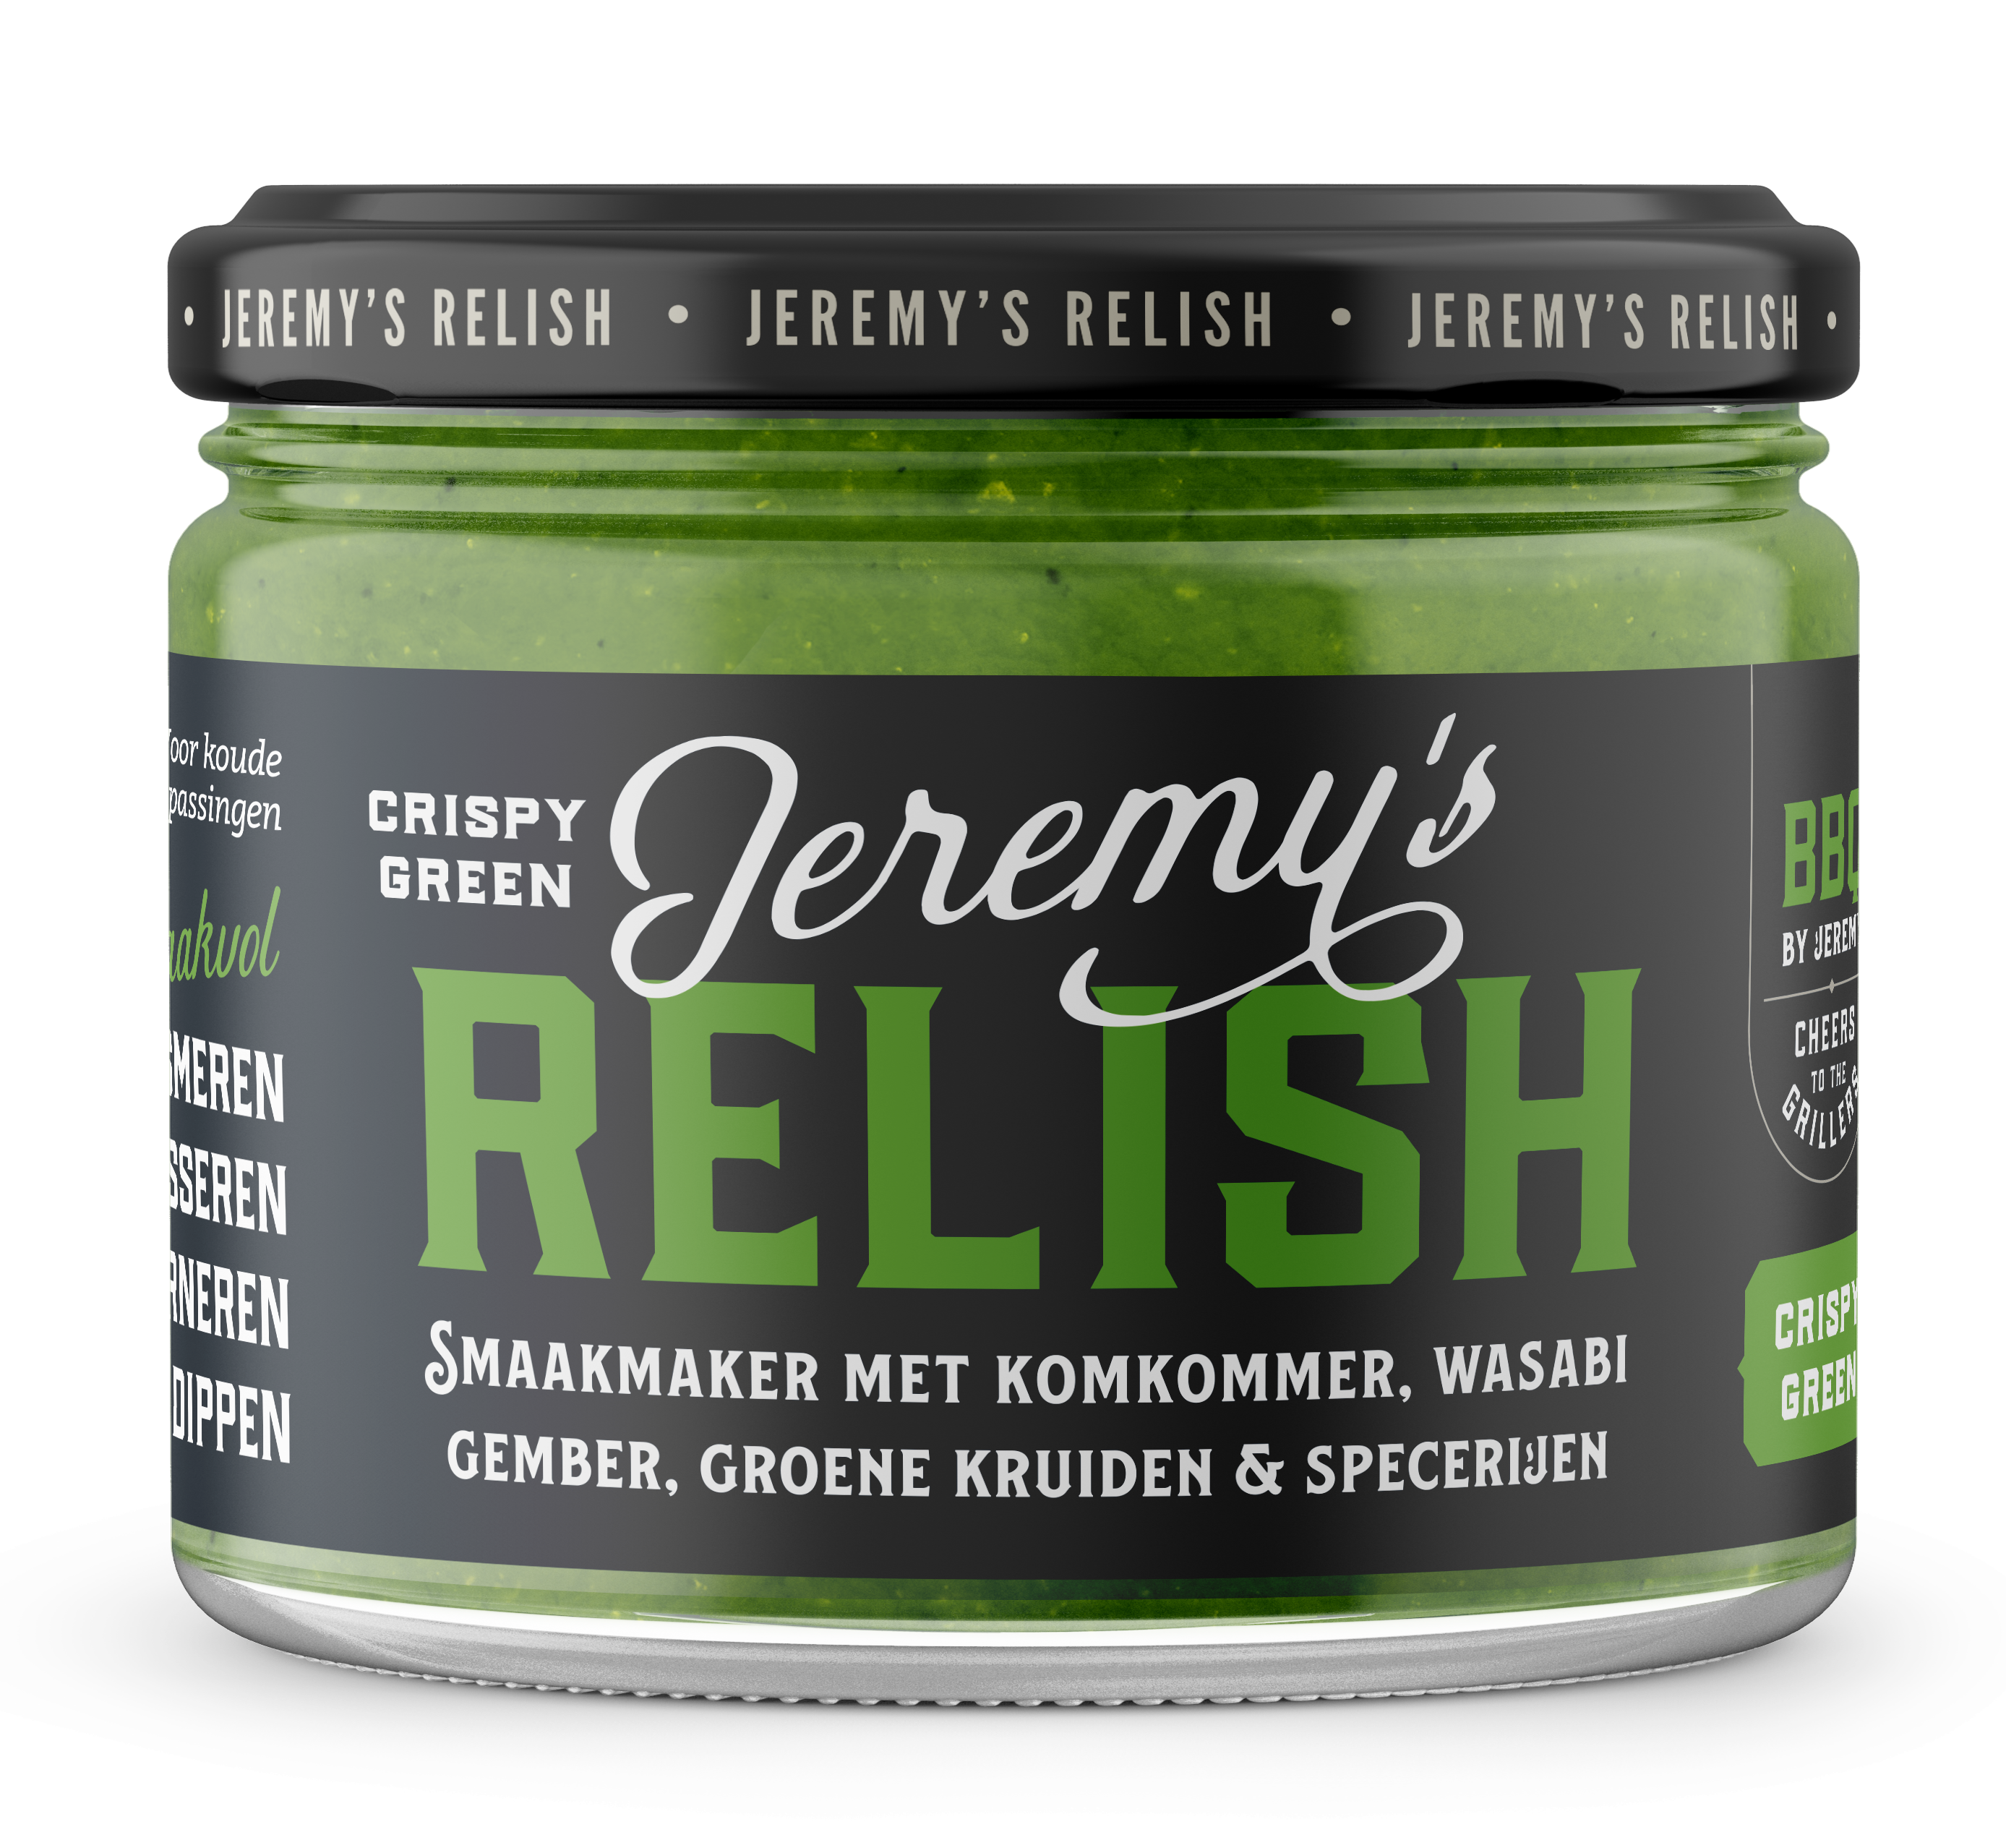 Jeremy's RELISH Crispy Green